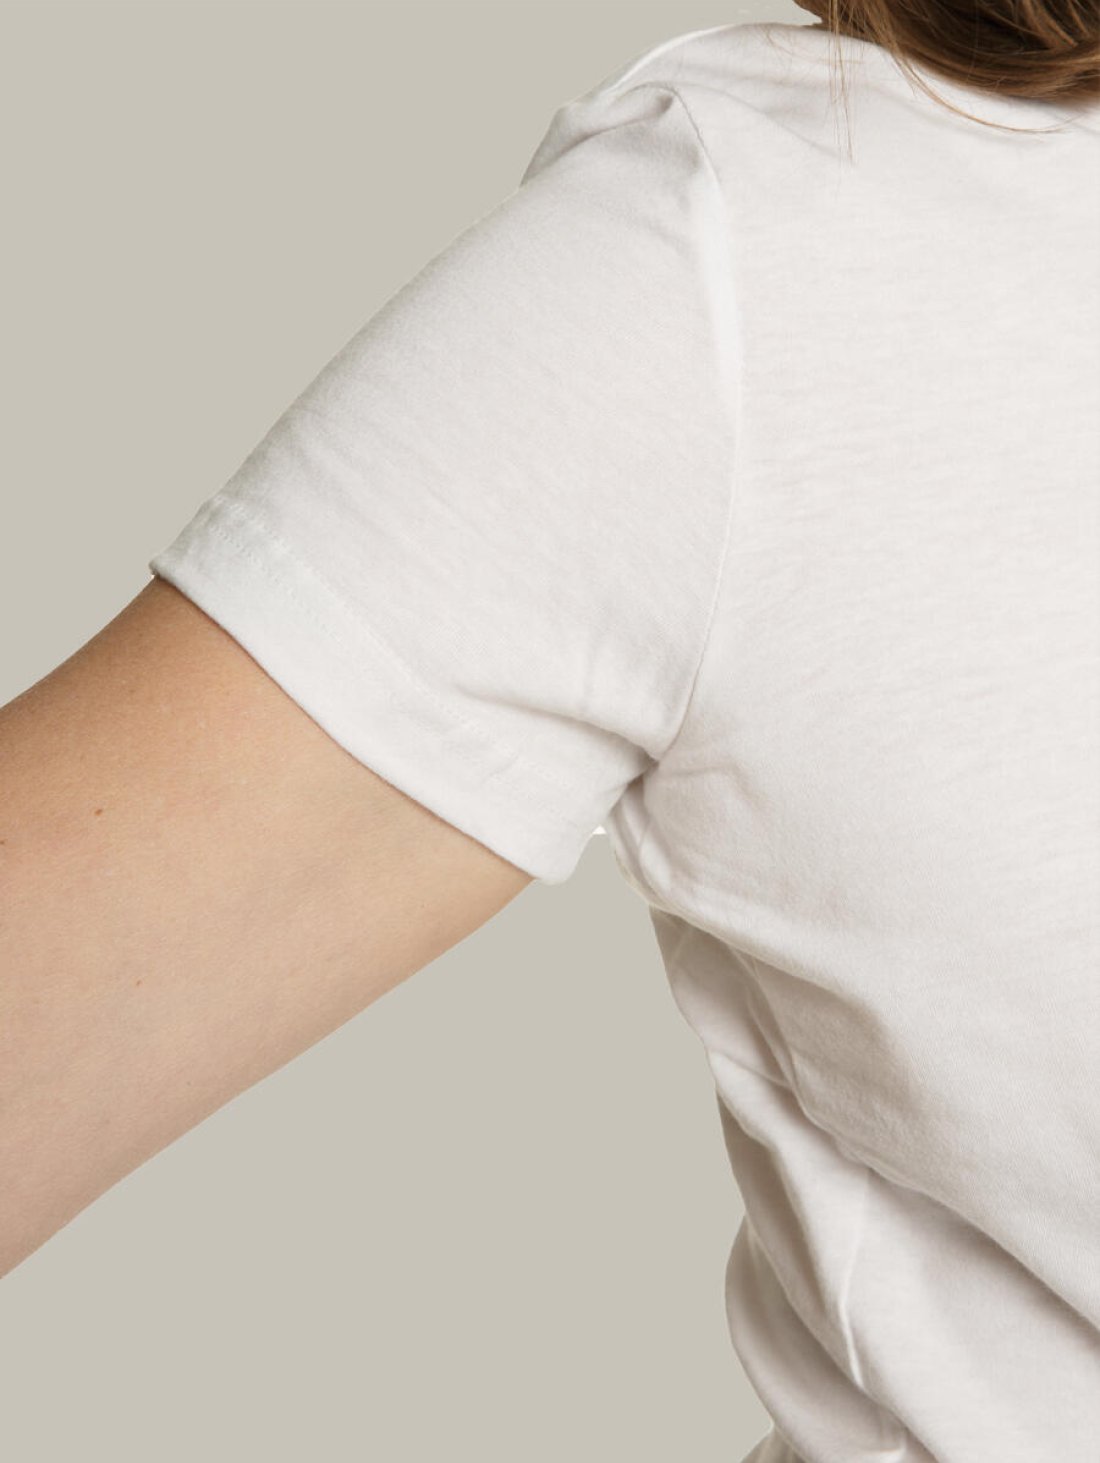 Жіноча футболка, біла з принтом аватара Hopper 056